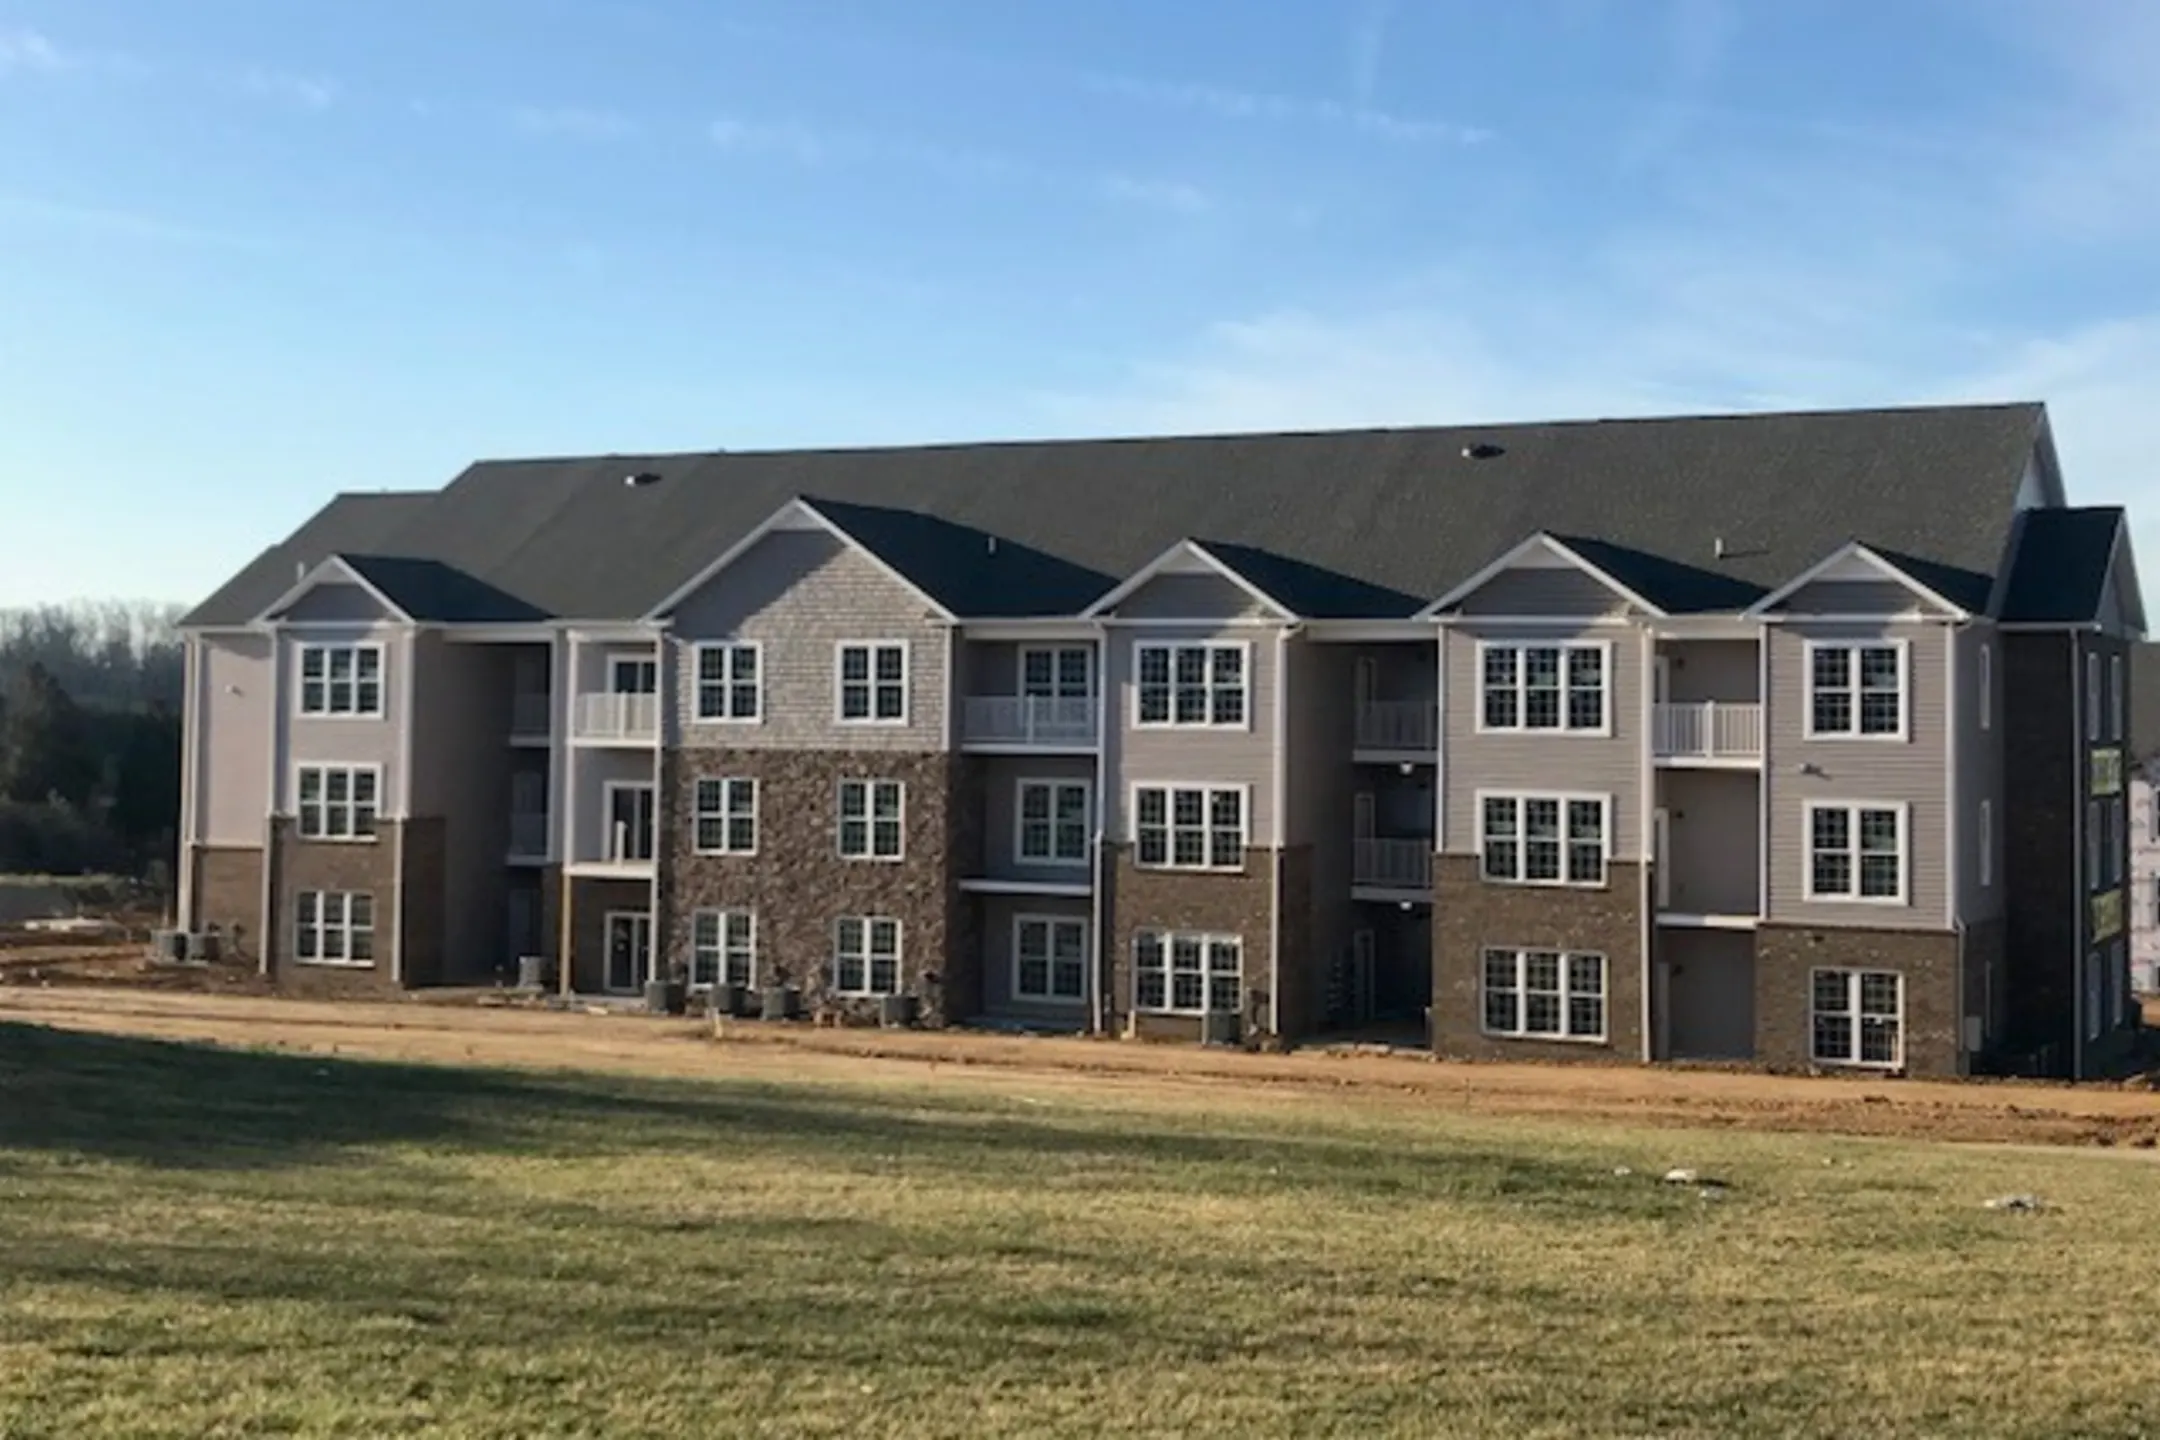 Building - The Aspen Apartments - Roanoke, VA